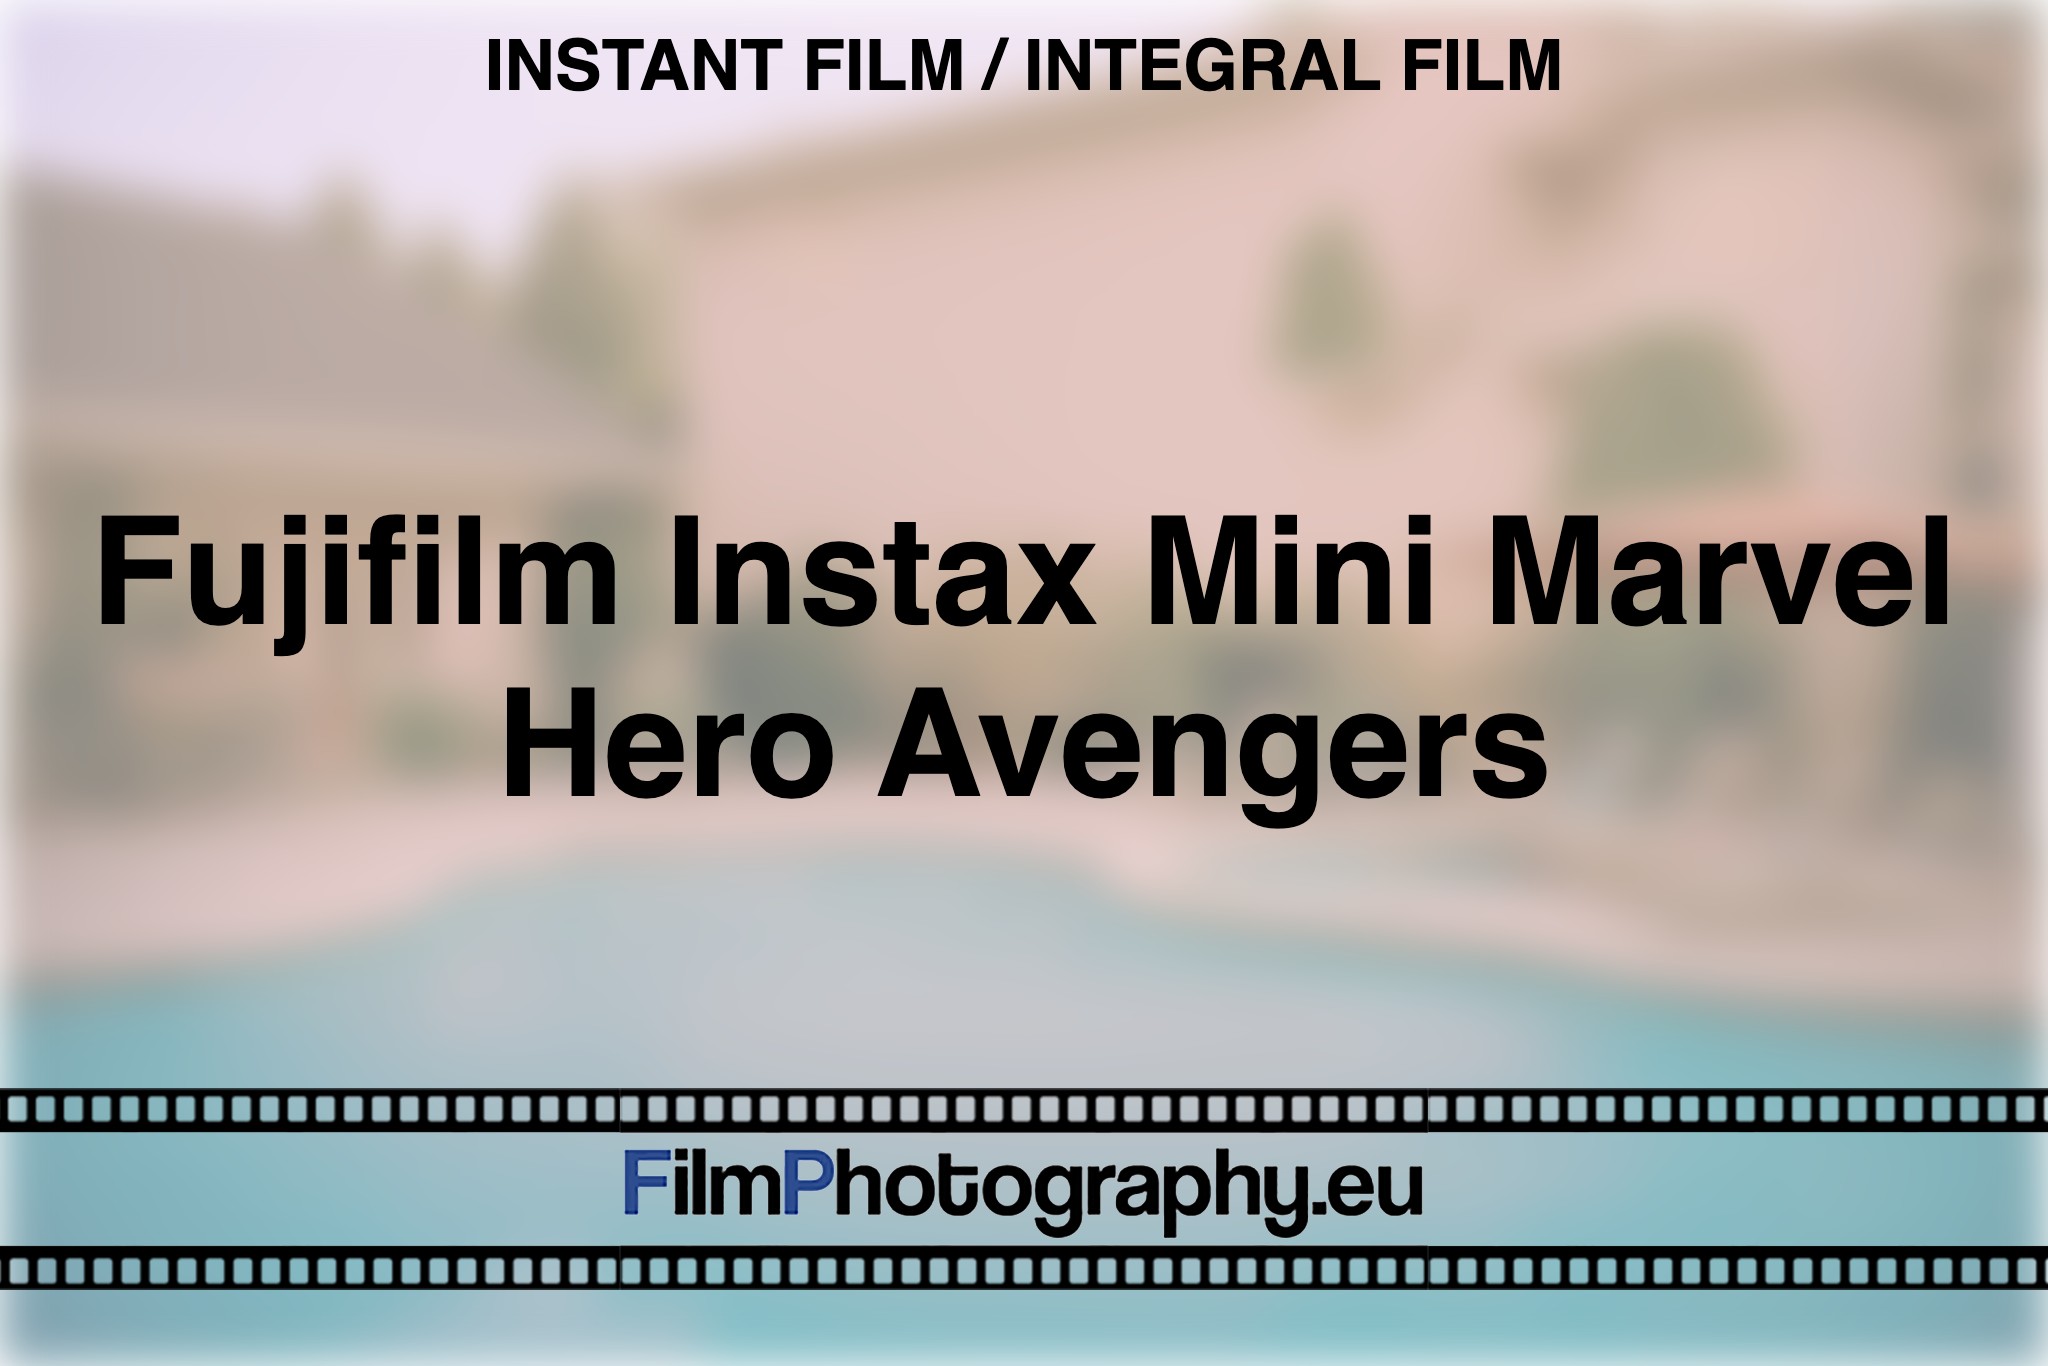 fujifilm-instax-mini-marvel-hero-avengers-instant-film-integral-film-bnv